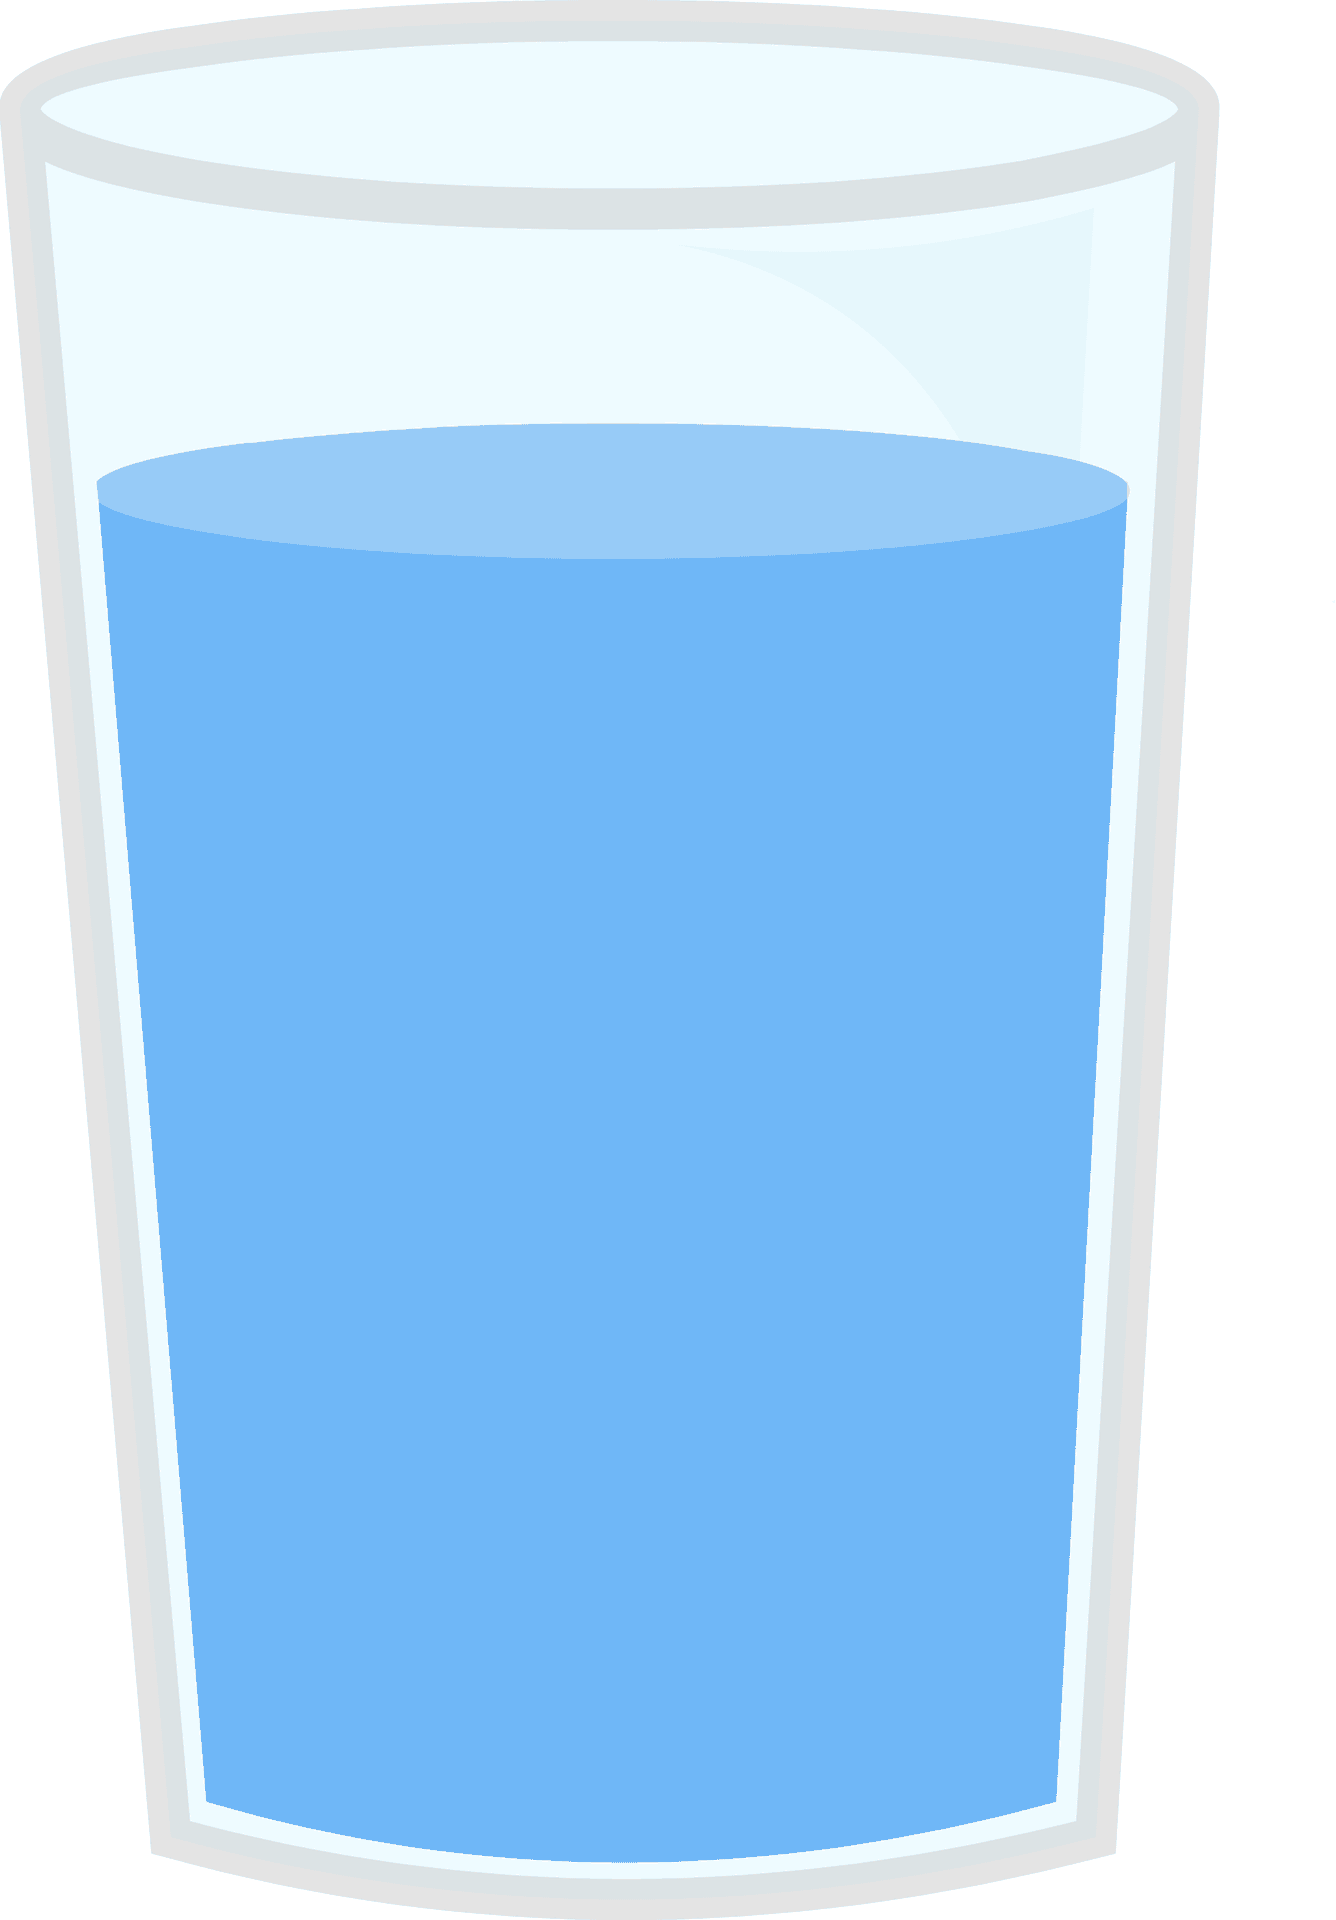 Half Full Glassof Water Vector Illustration PNG image